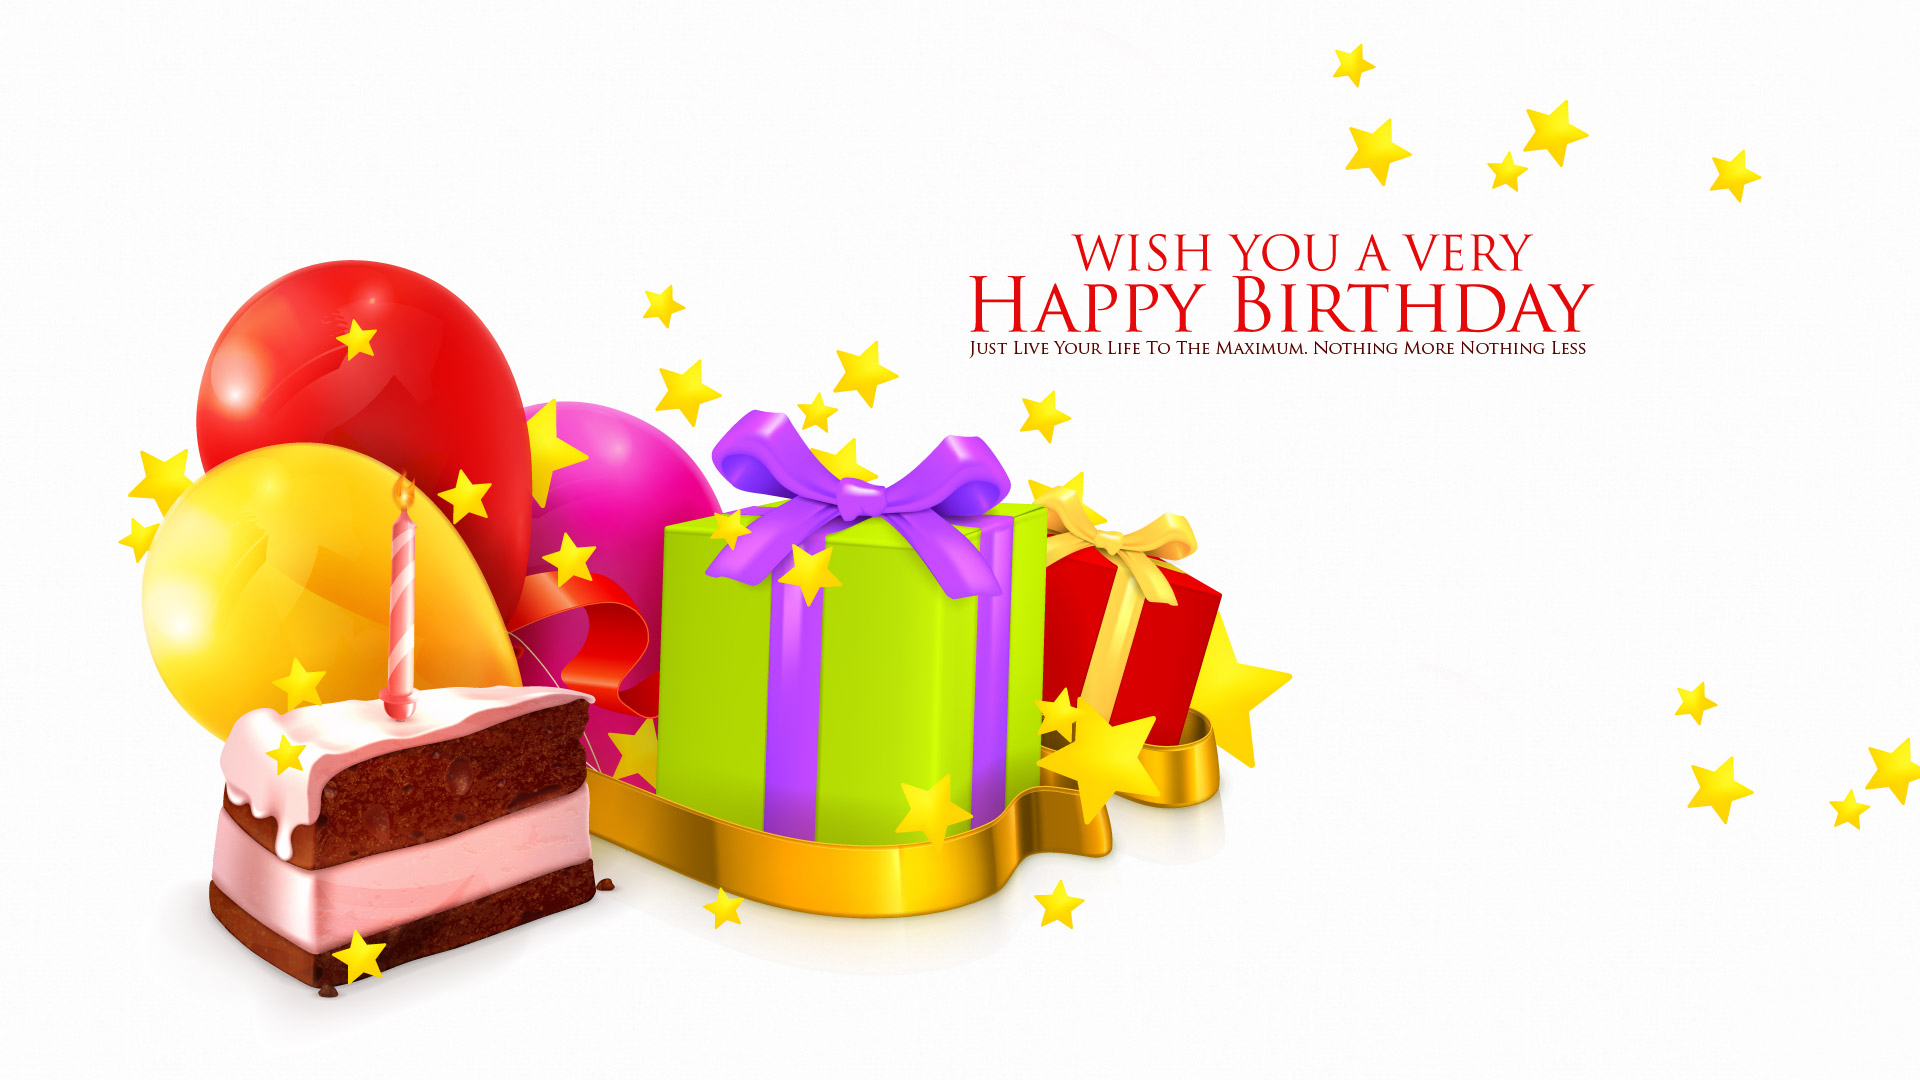 wishing happy birthday in hindi images